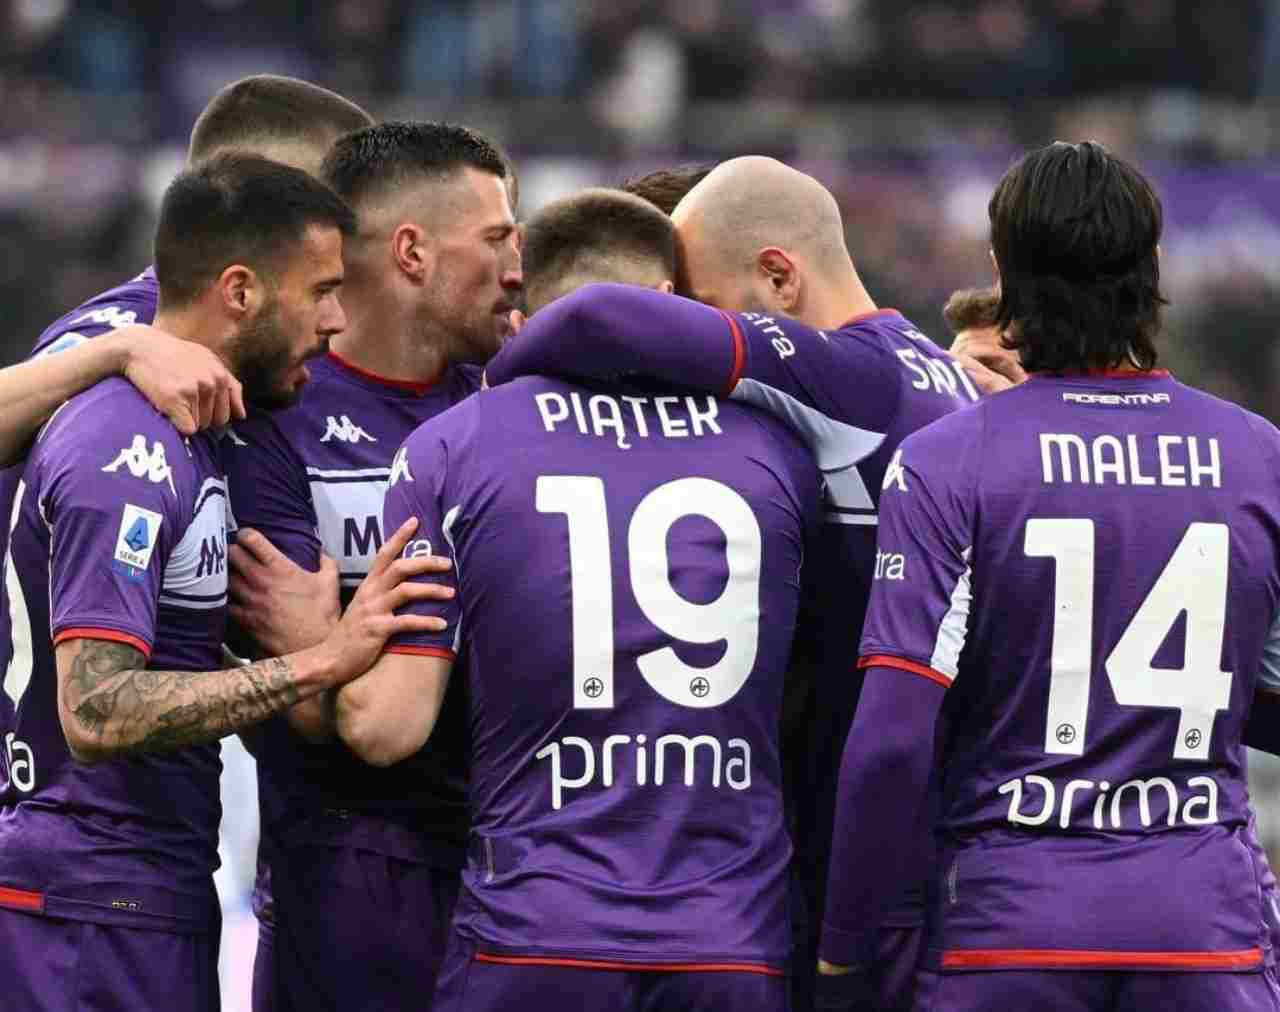 Calciomercato, scambio Fiorentina Napoli - Stopandgoal.com (Instagram Piatek)